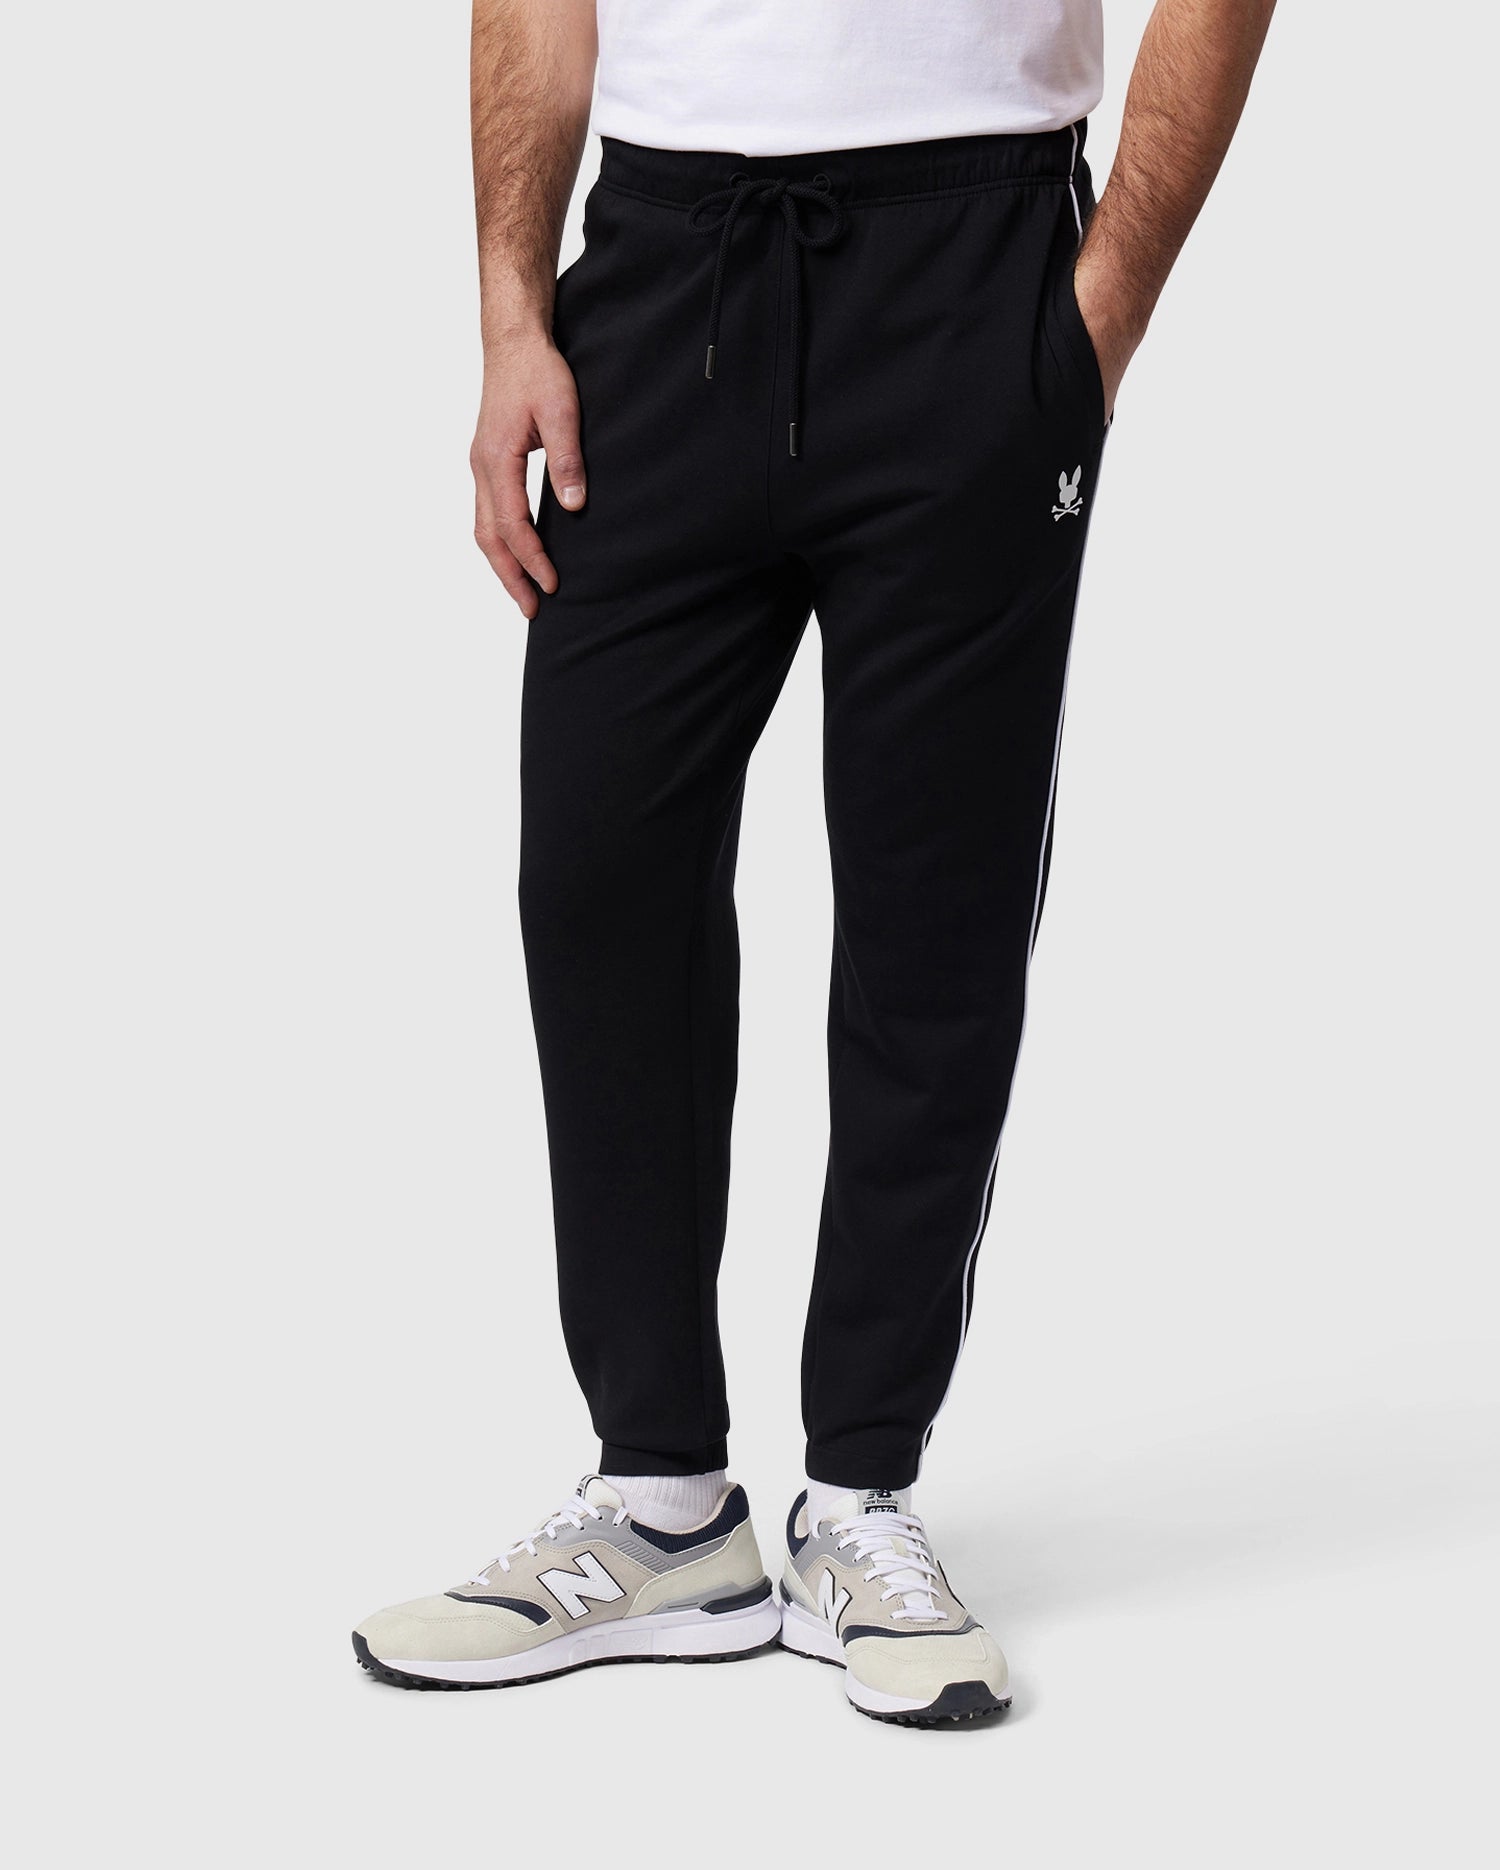 Sweatpants for Men Sweatpants Pants With Stretch Solid Black Xxl